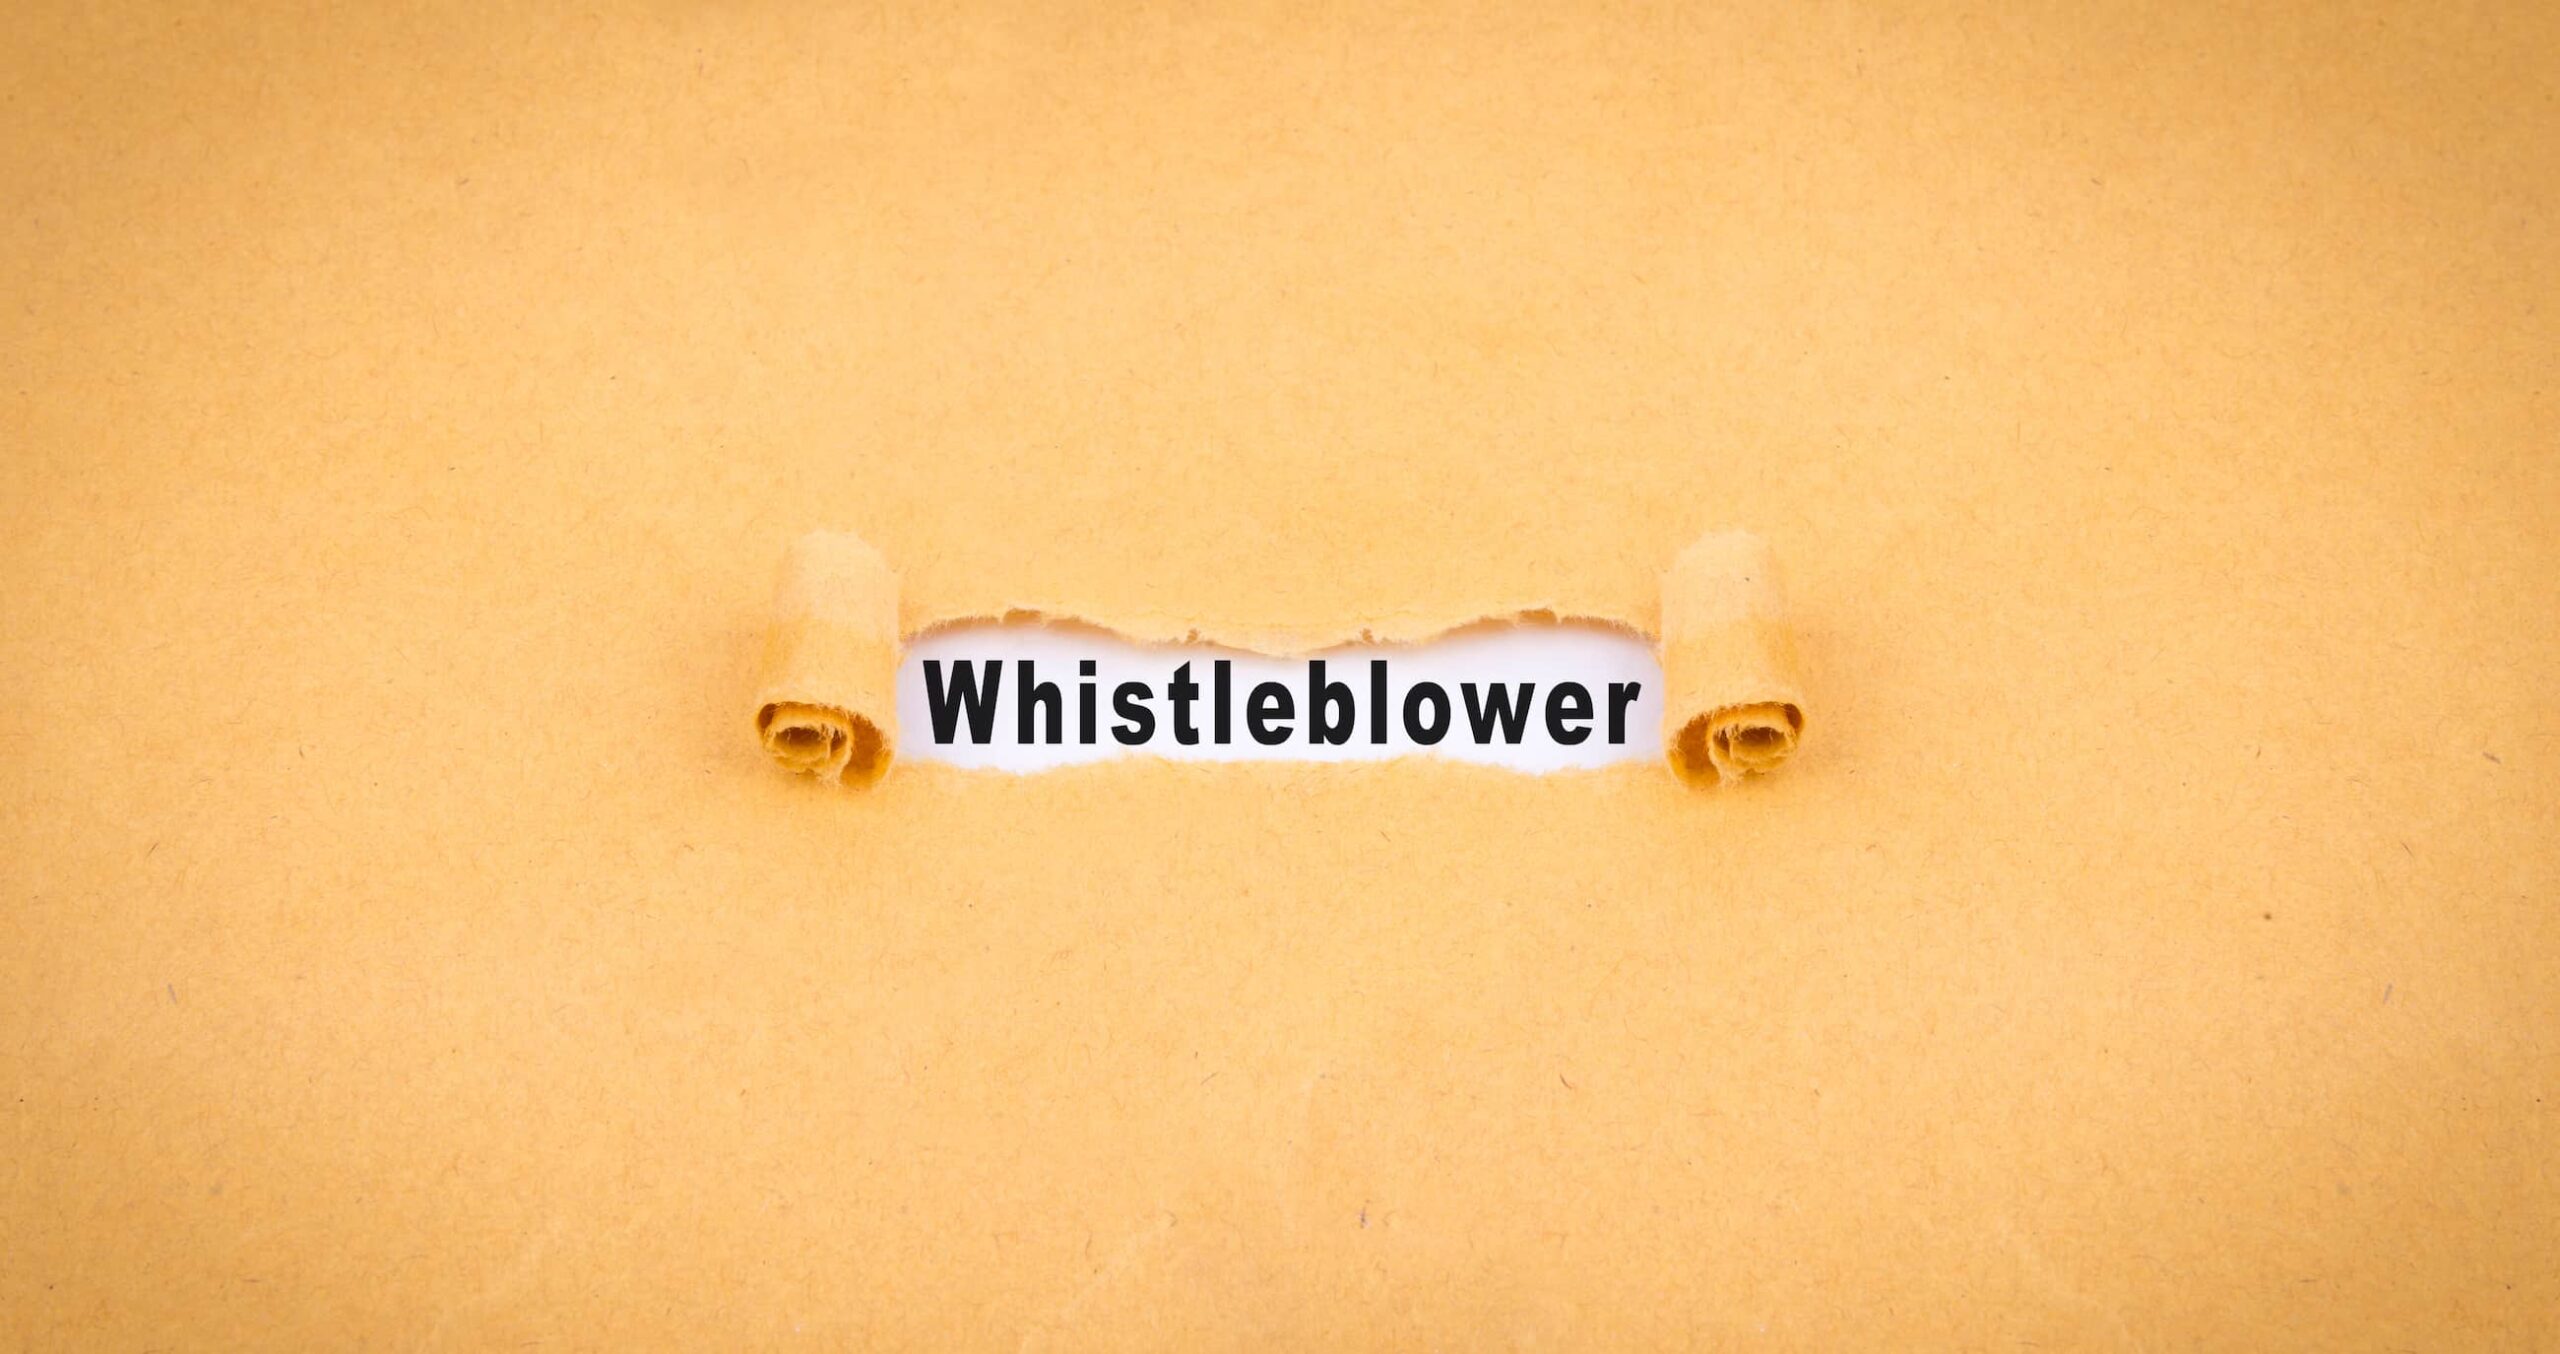 Whistleblower image